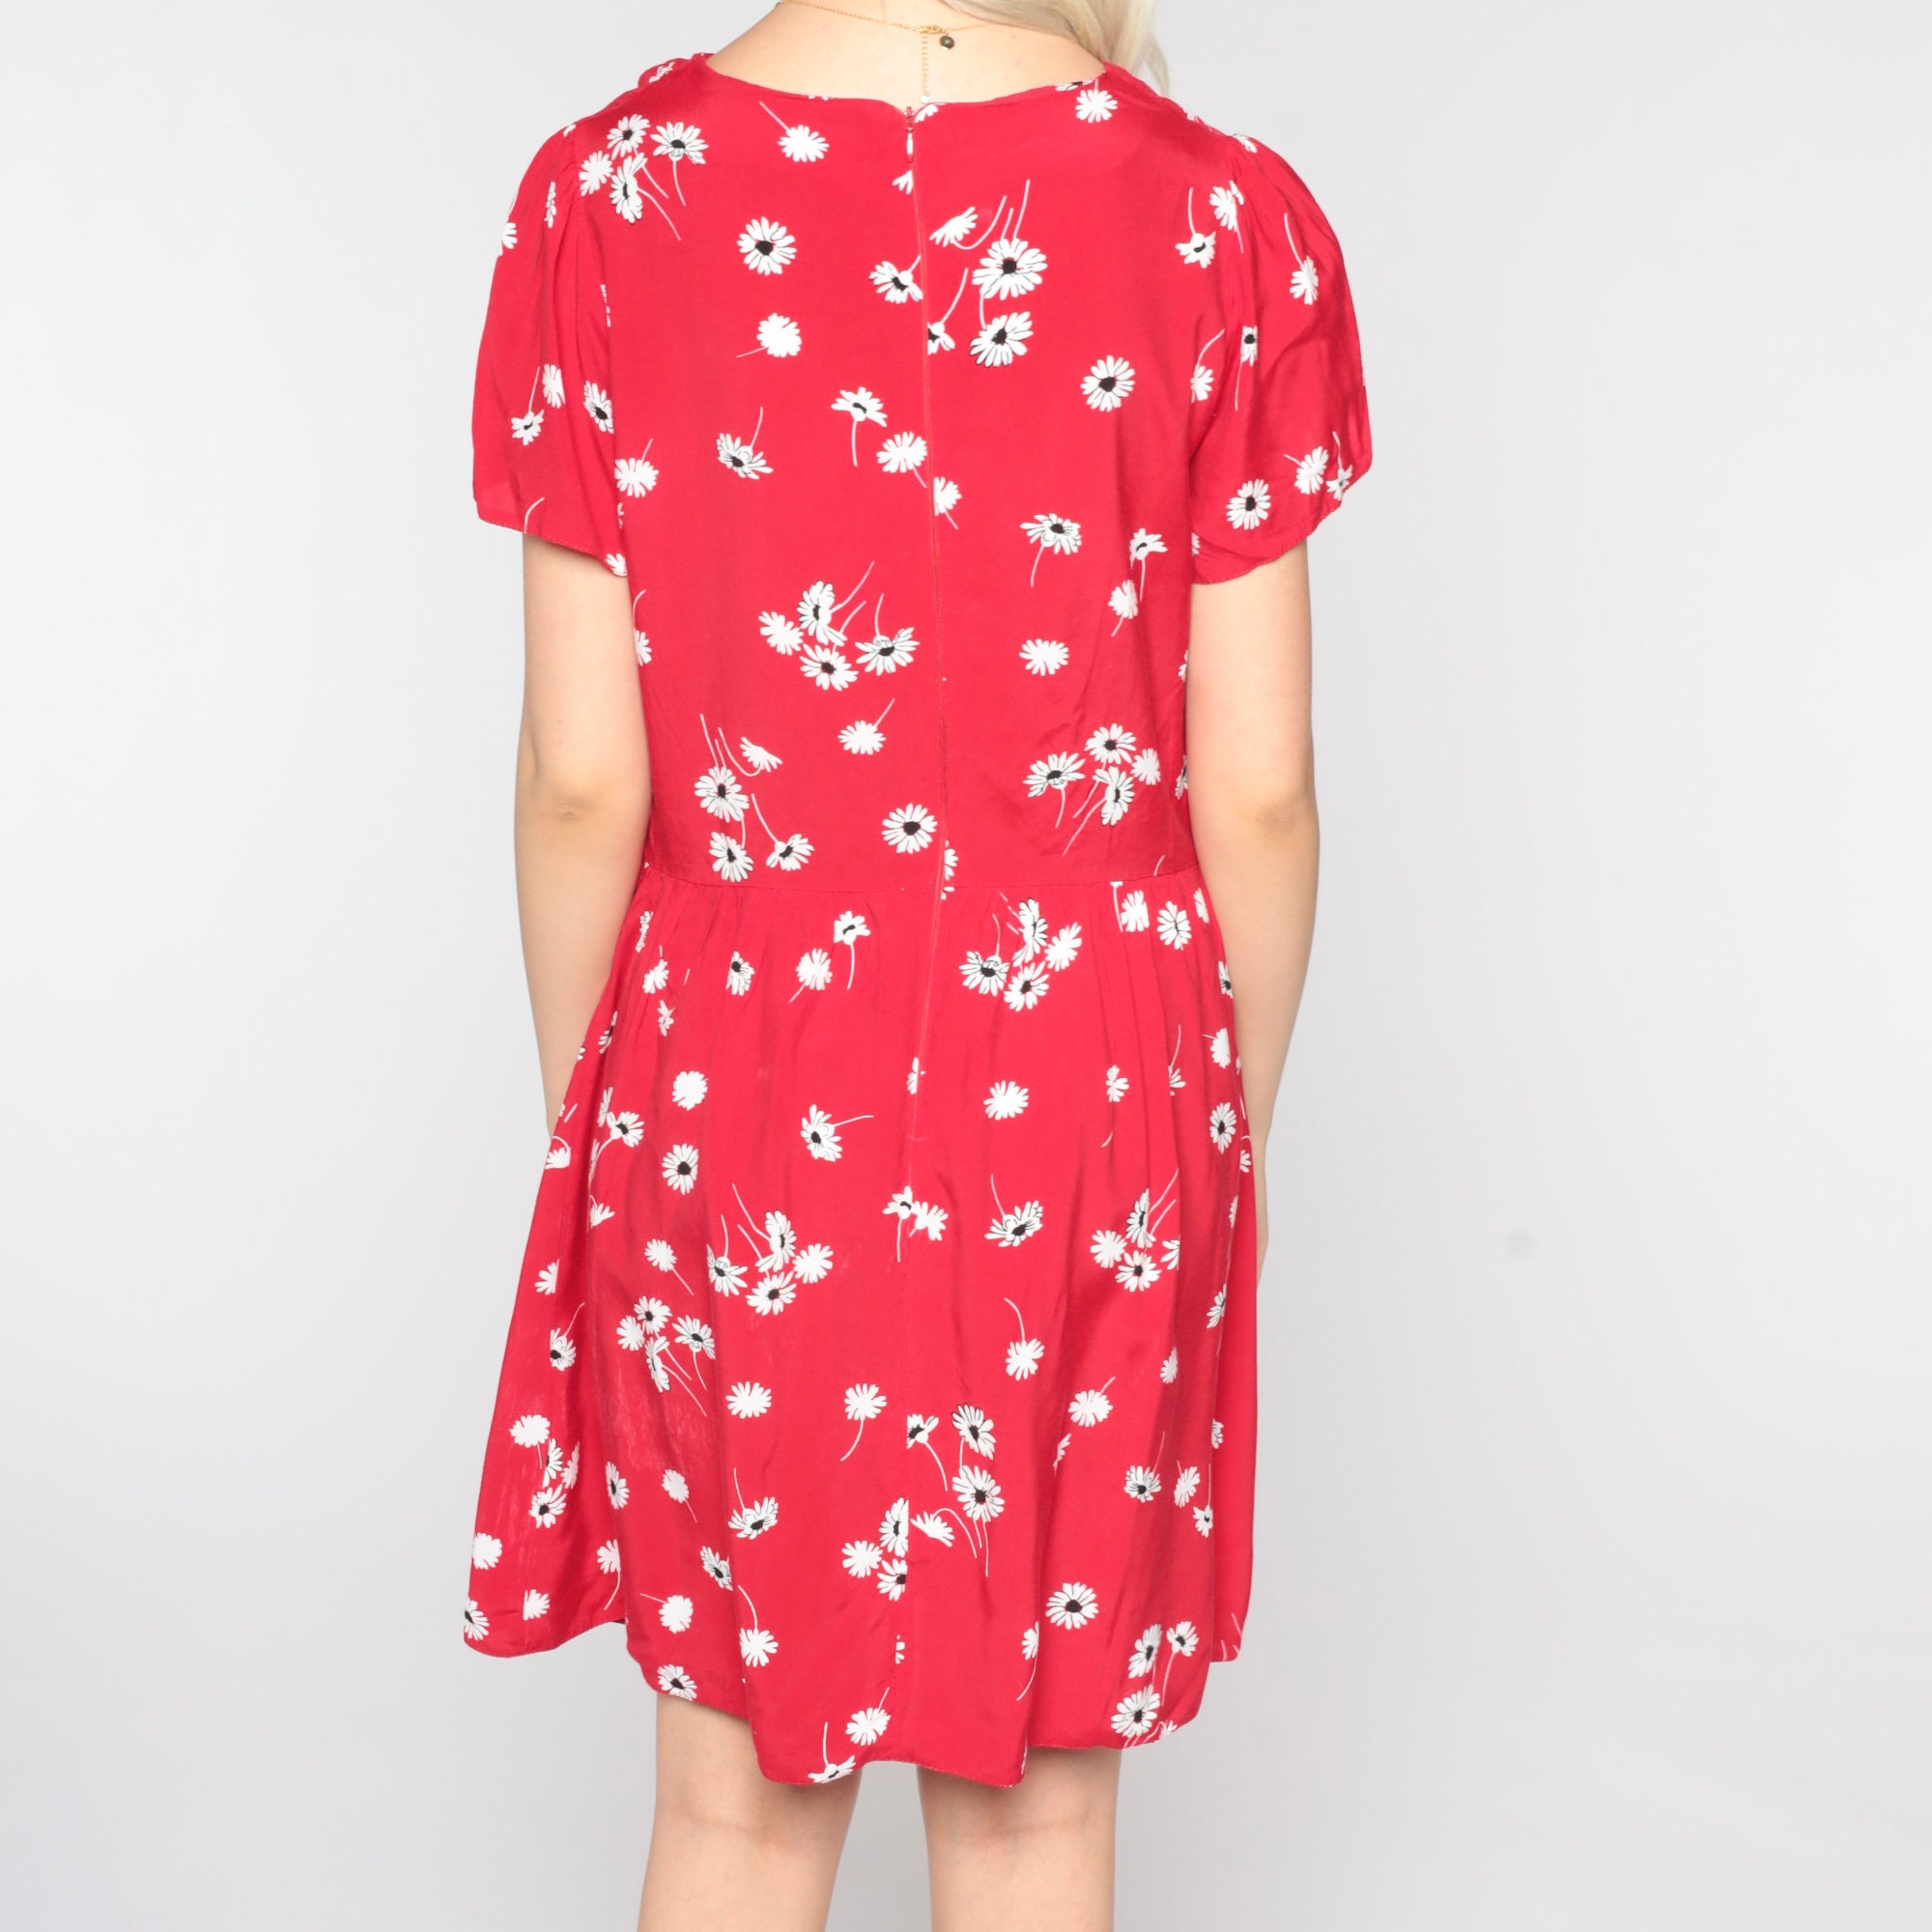 Red Floral Dress Y2k Mini Dress Boho Grunge Retro Day Dress Flower ...